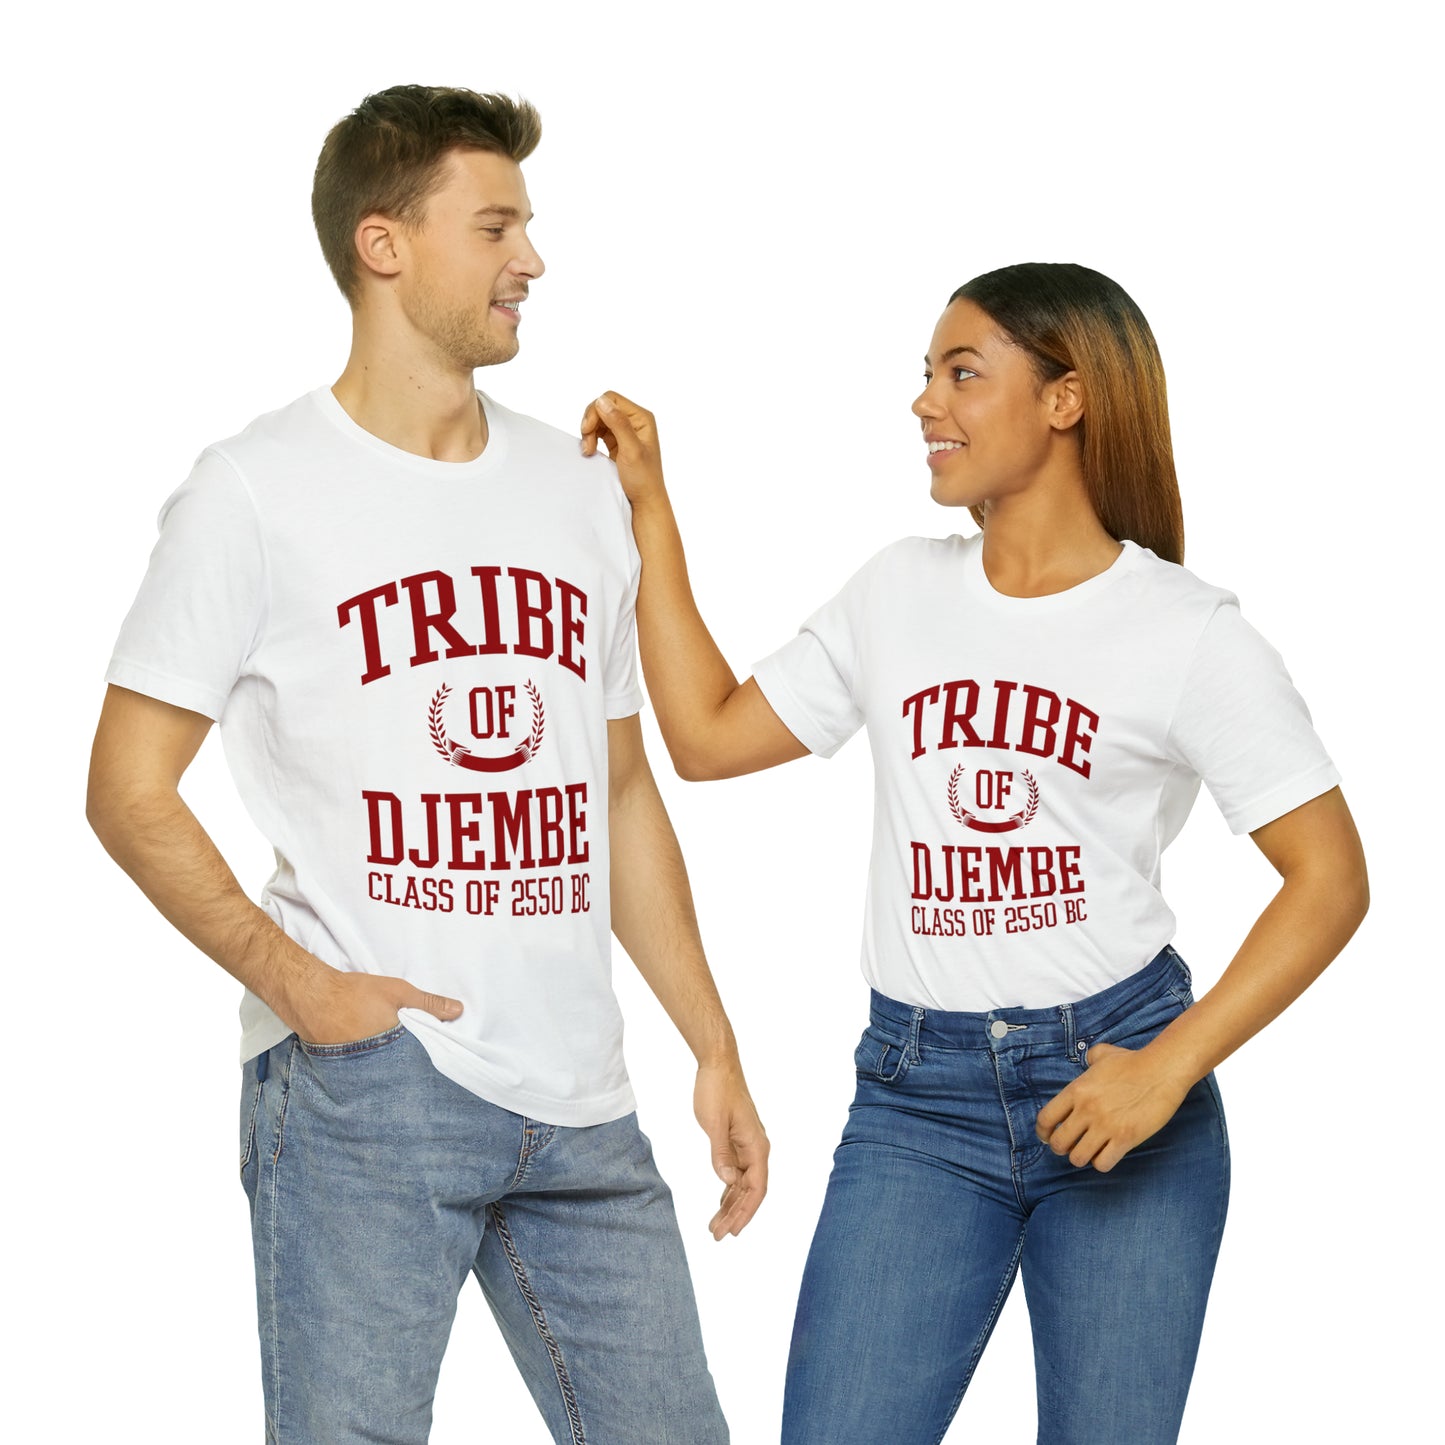 Tribe of Djembe Class of 2550 DC -Virgin White T-Shirt